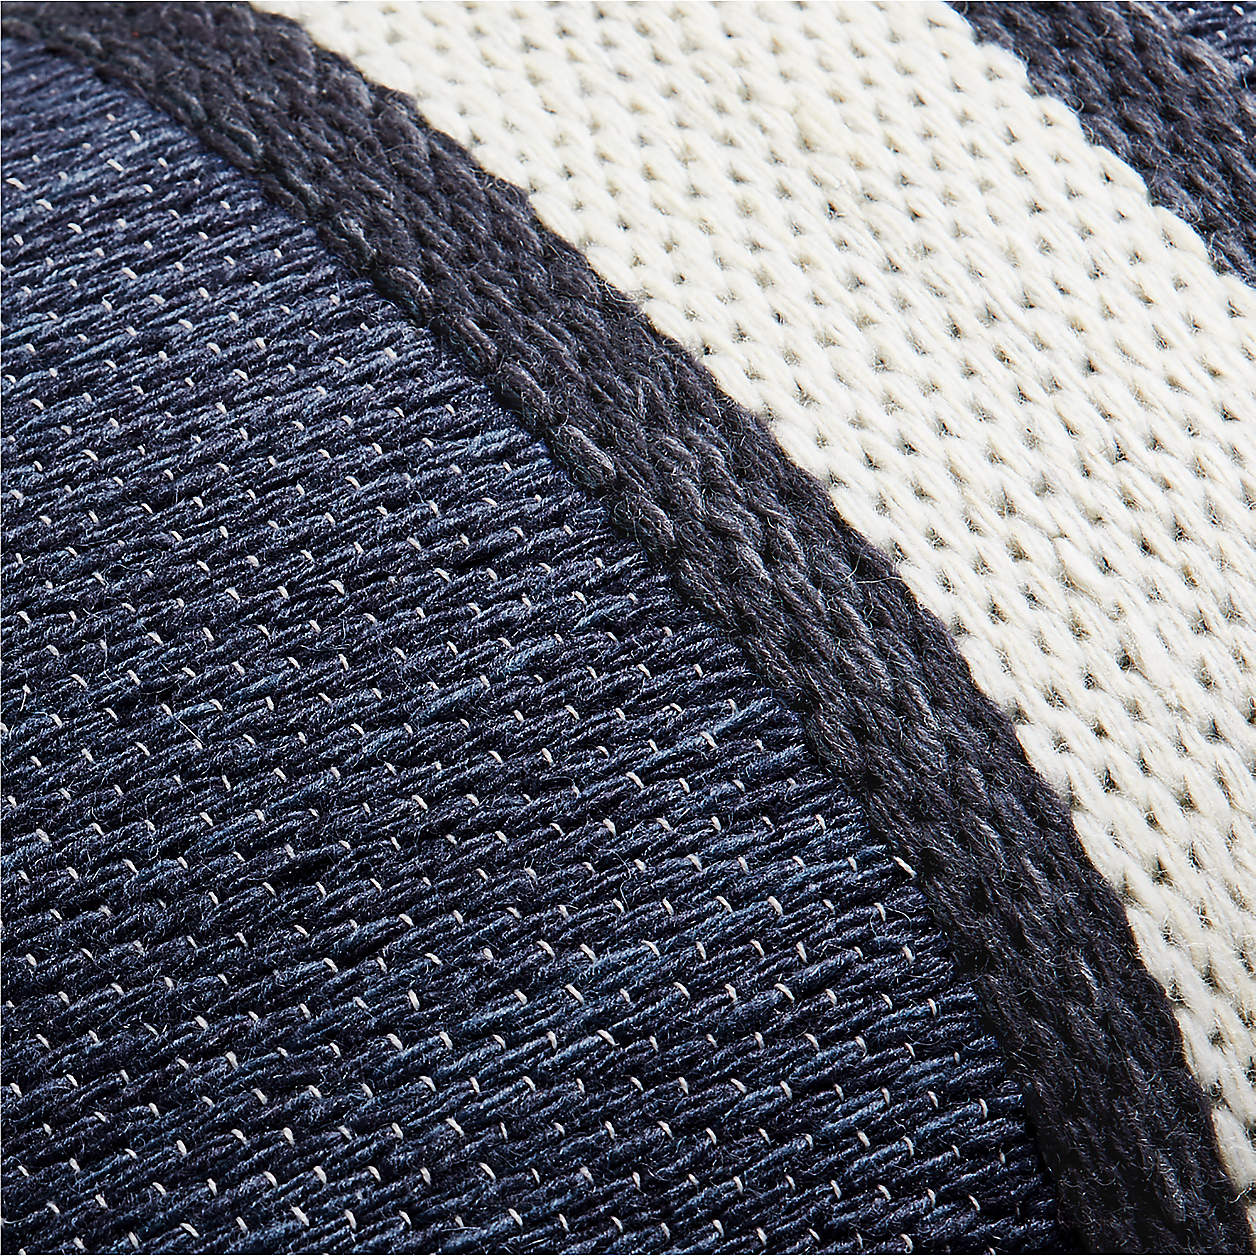 Lazio Woven Kilim Stripe 22"x15" Deep Indigo Blue and Arctic Ivory Throw Pillow Cover